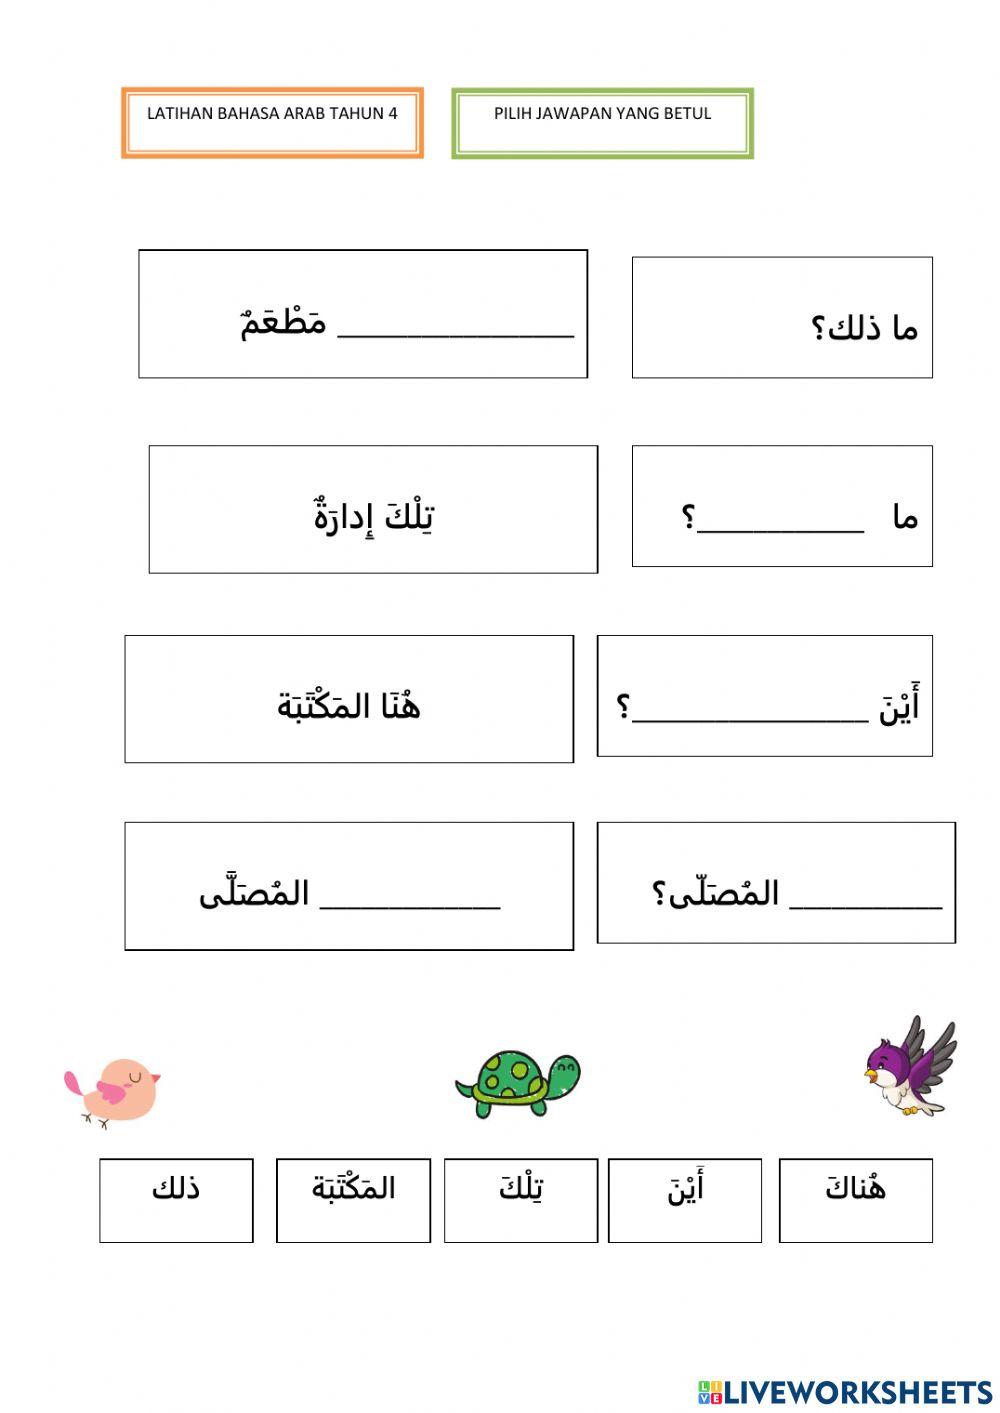 Latihan bahasa arab tahun 4